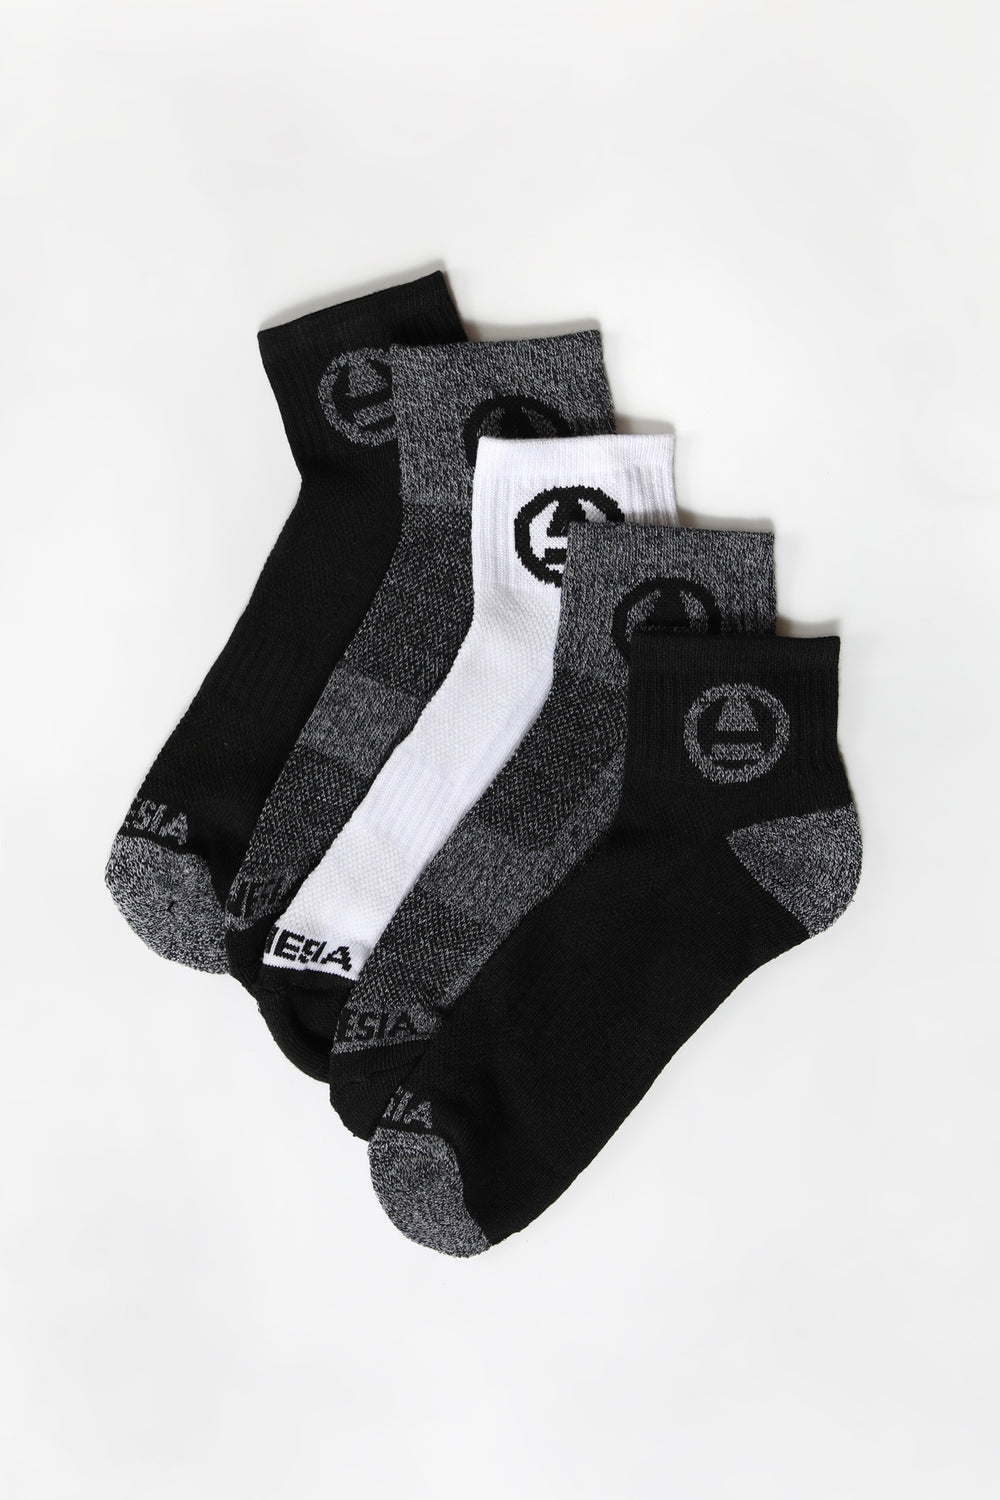 Amnesia Mens 5-Pack Athletic Ankle Socks Black with White